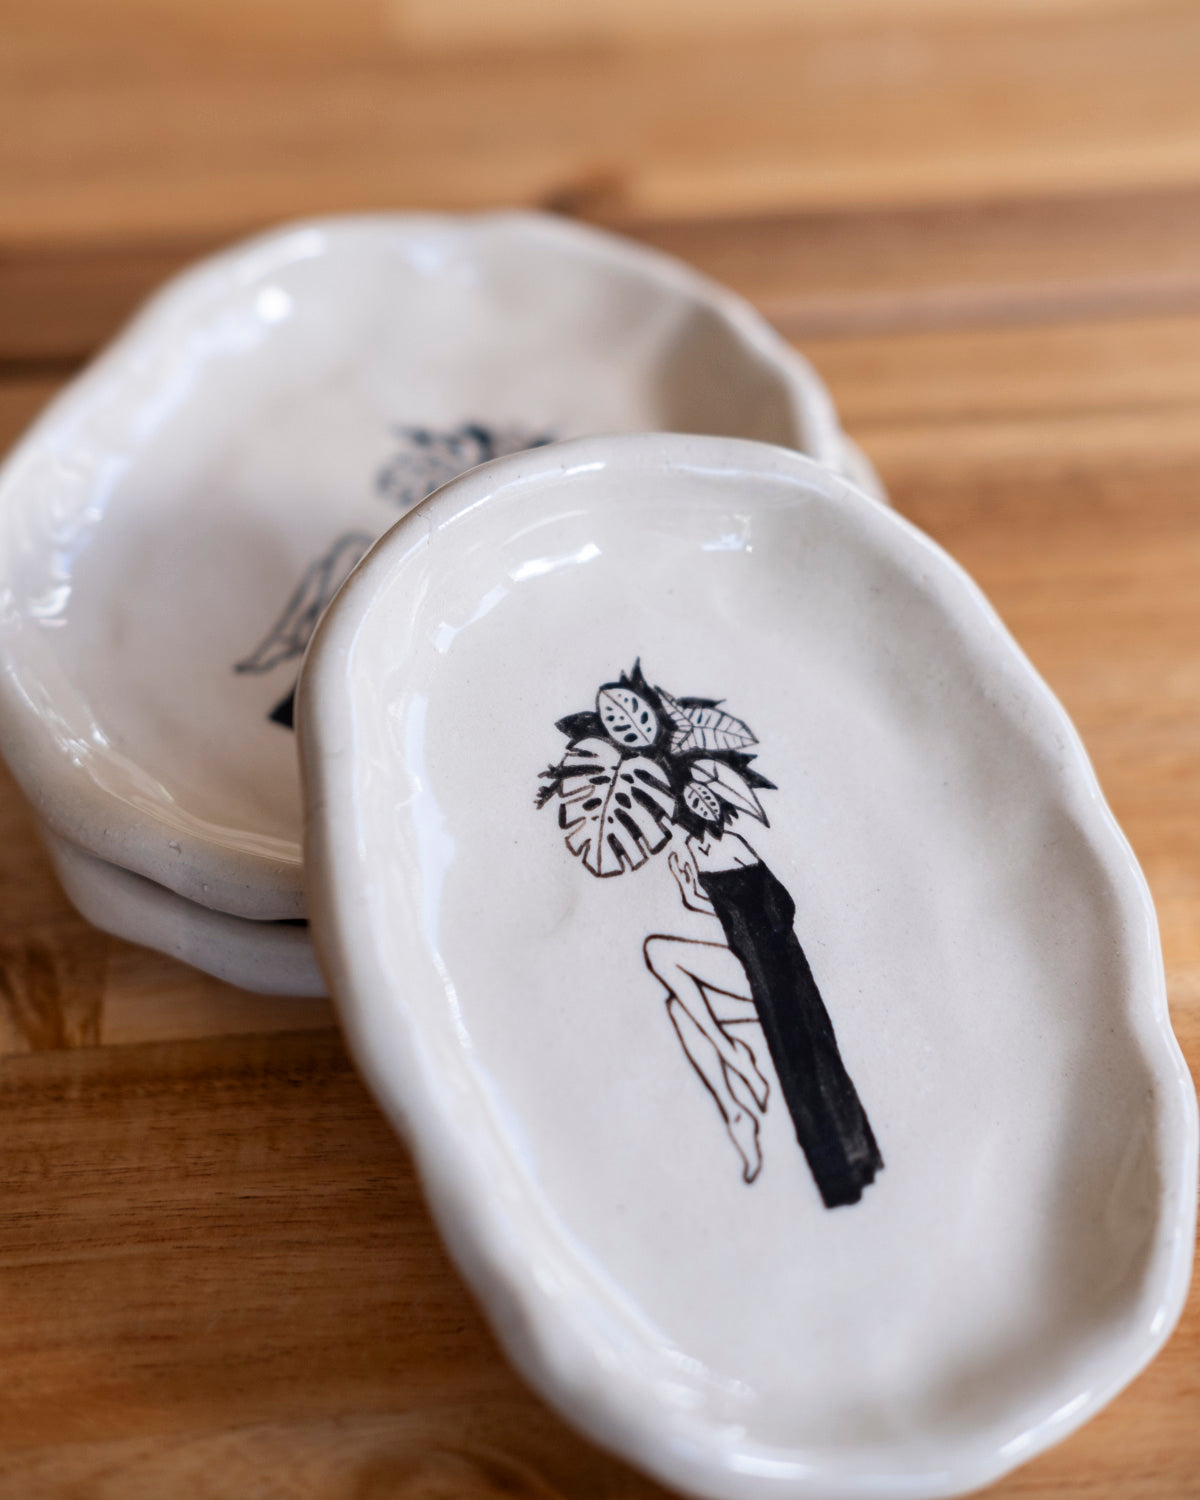 Handmade ceramic dish with sexy plant lady design